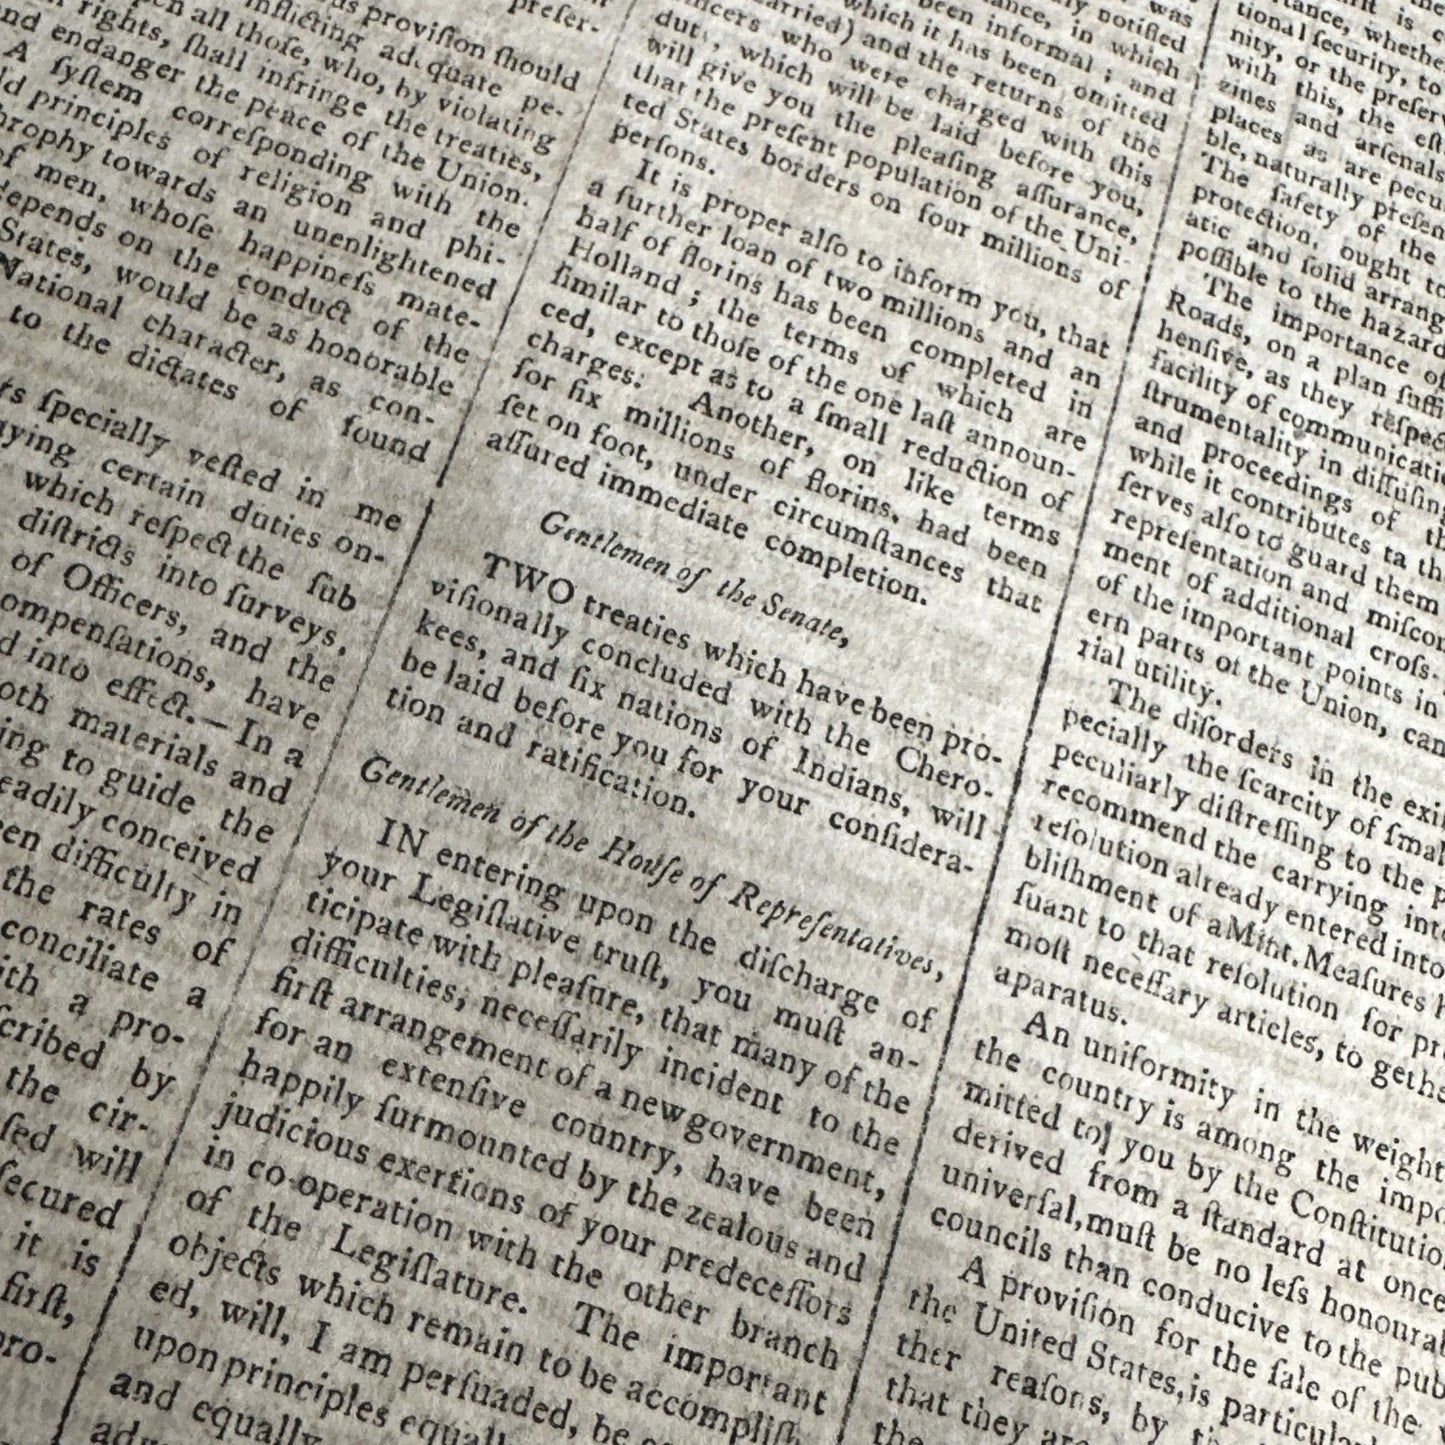 1791 Newspaper reporting Washington’s State of the Union Address